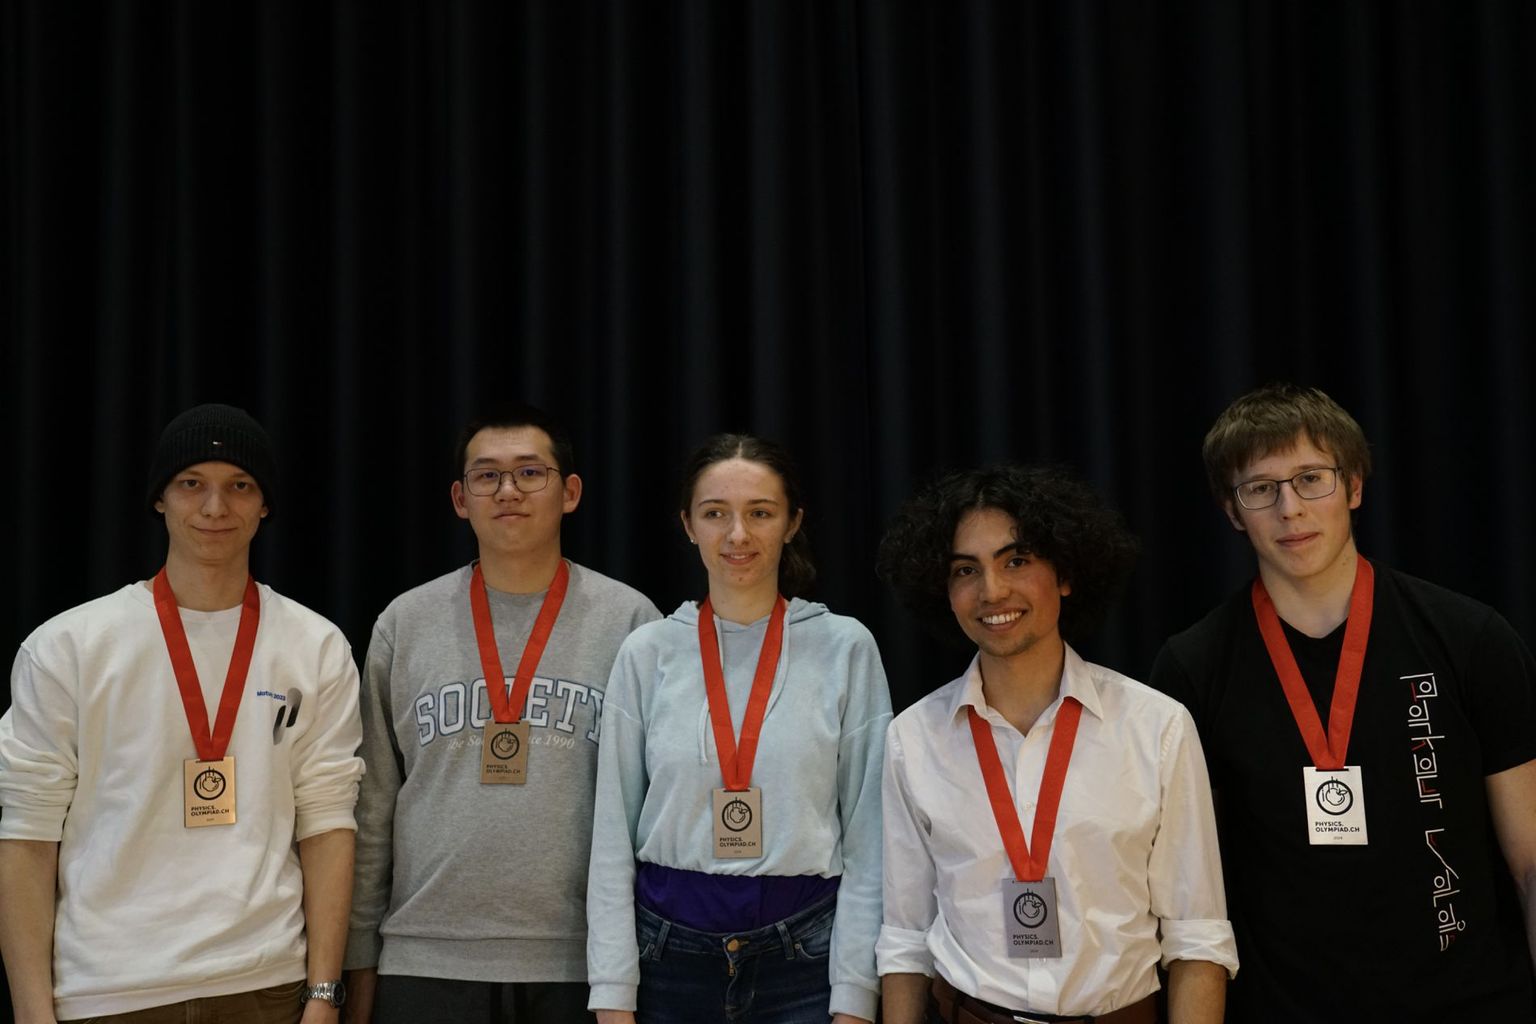 La médaille de bronze est allée à (de gauche à droite) : Florian Brauss, Felix Qingzhou Xu, Noelia Cheridito, Silvan Zumbrunn, Stéphane Weber.